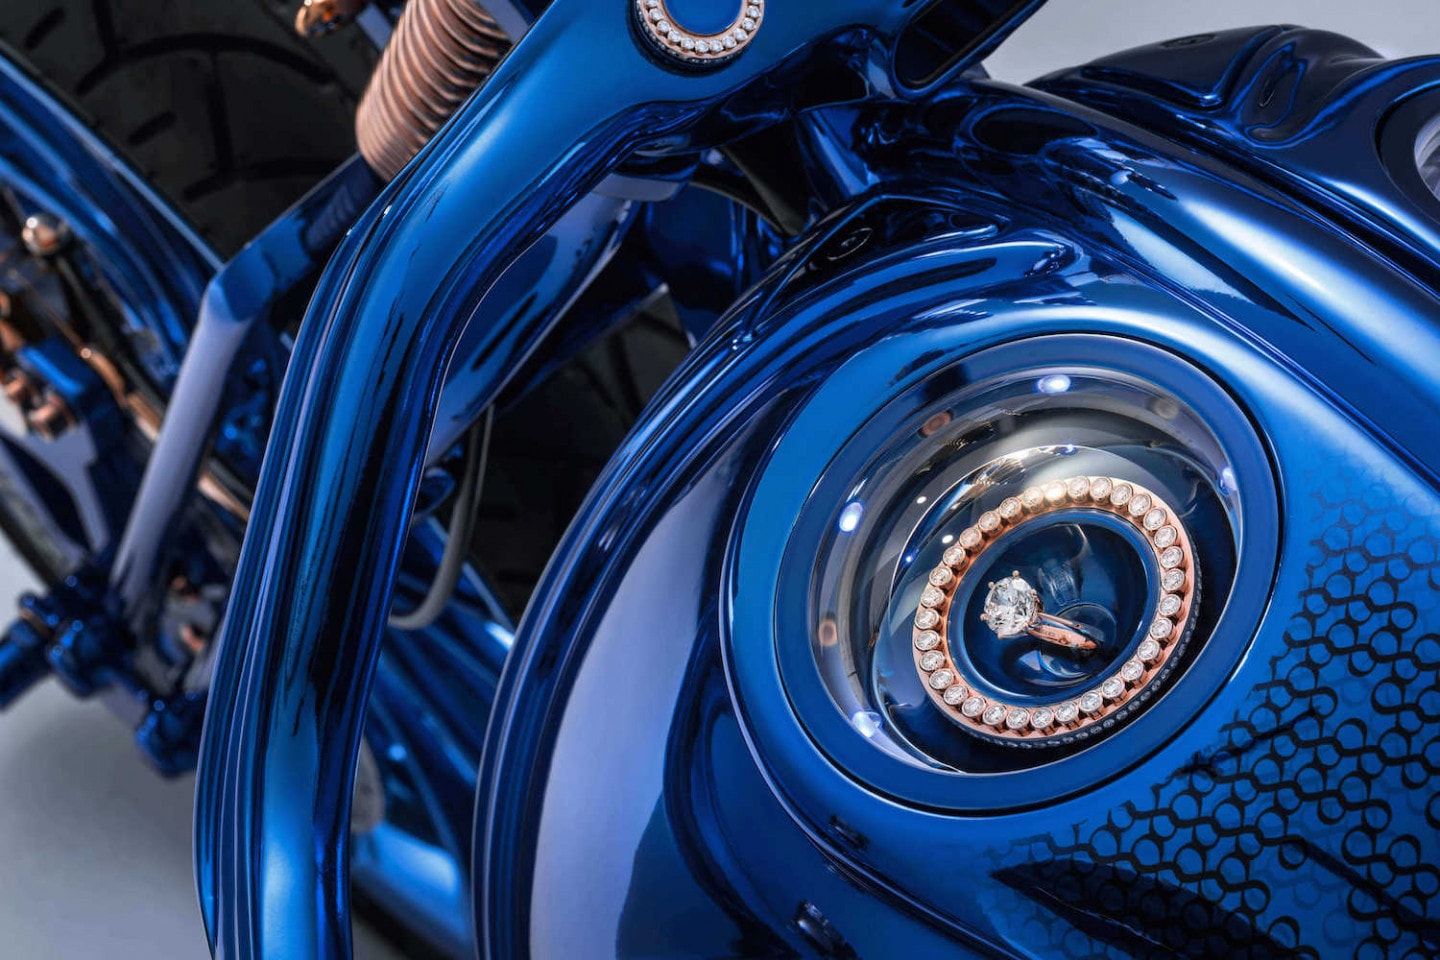 Bucherer Bundnerbike Harley Davidson Blue Edition Motorcycle 1 79 million dollars usd bike